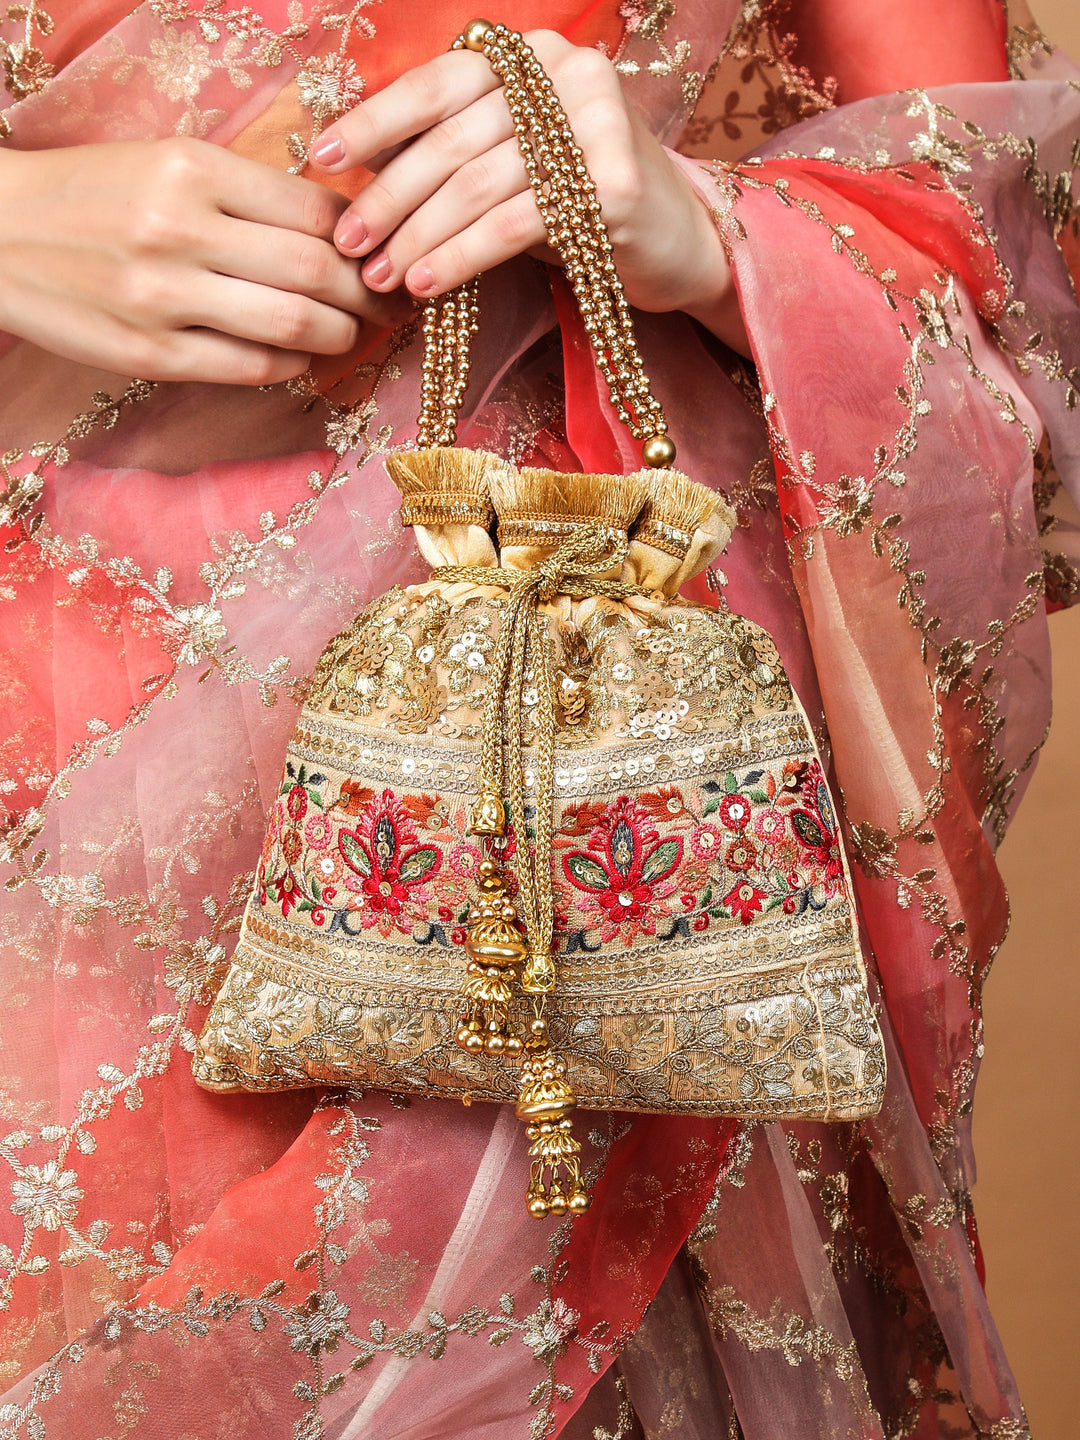 Rubans Light Brown Coloured Potli Bag With Multicoloured Embroidery Handbag & Wallet Accessories